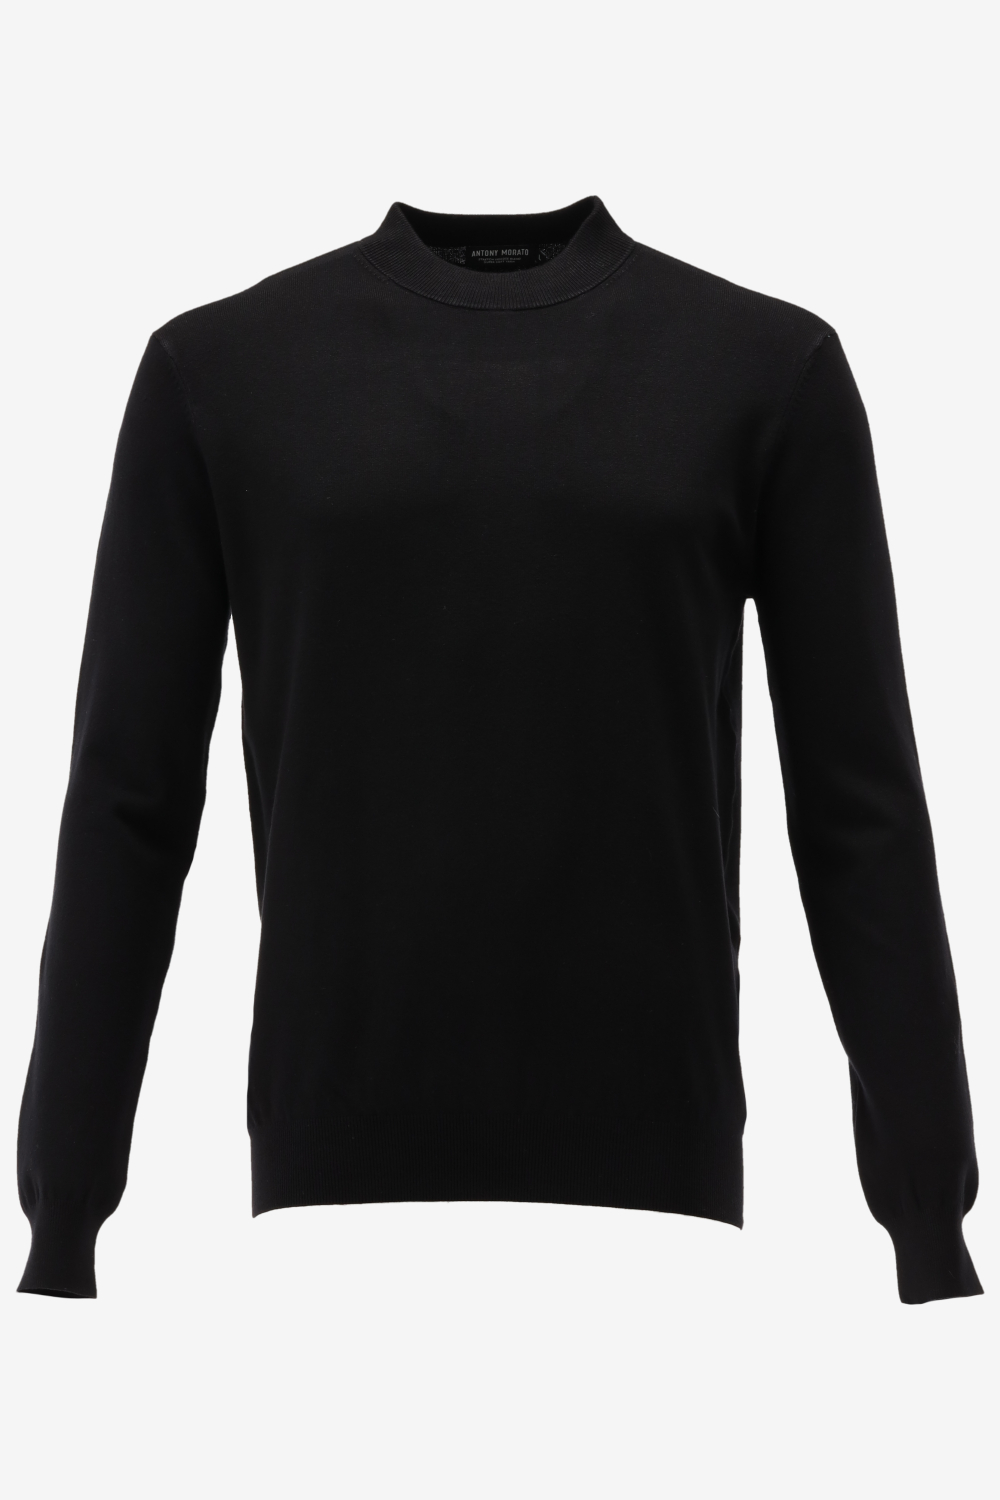 Antony Morato MMSW01407 regular fit sweater zwart, S